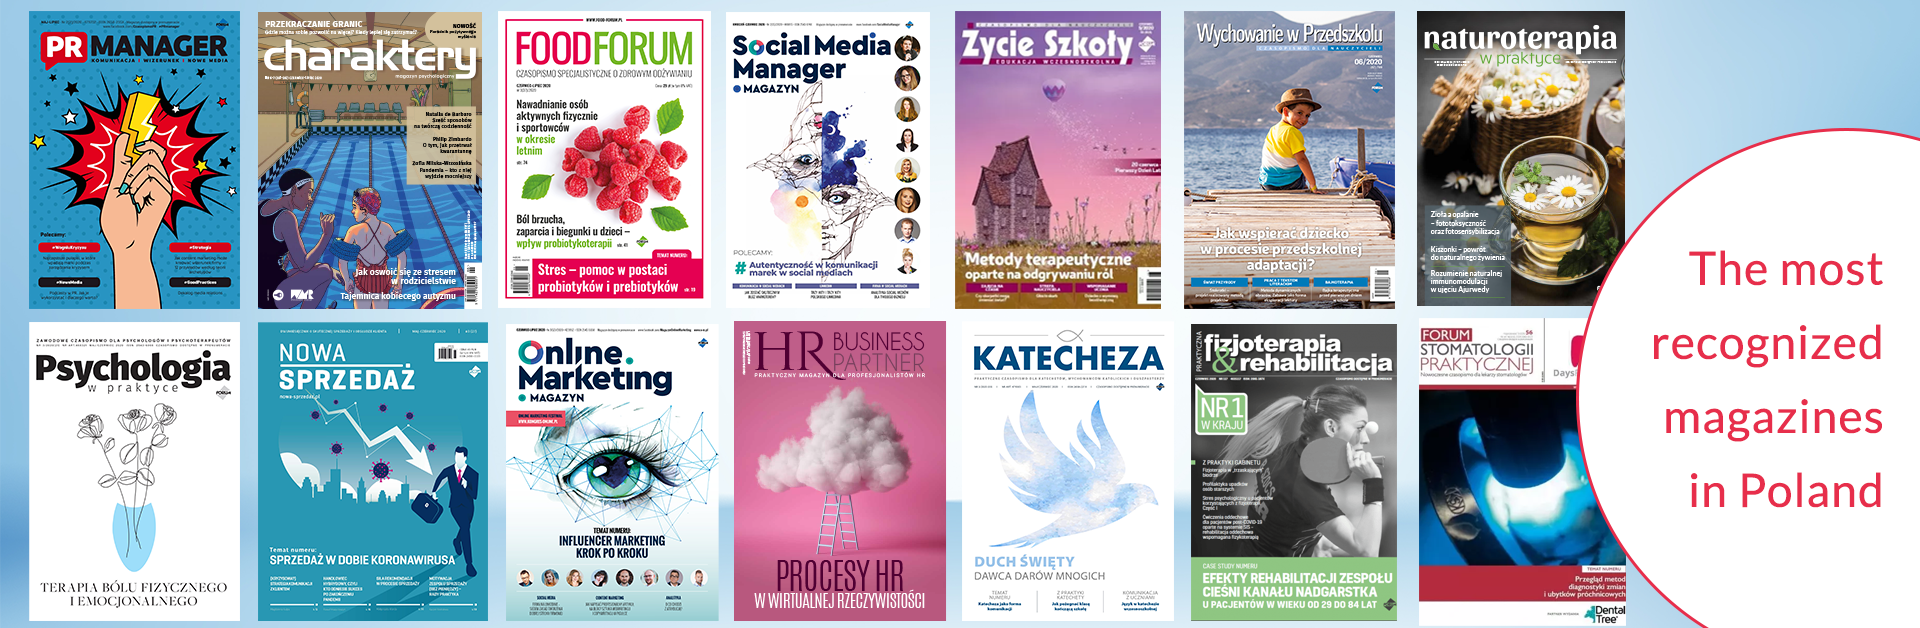 Forum Poland Magazines